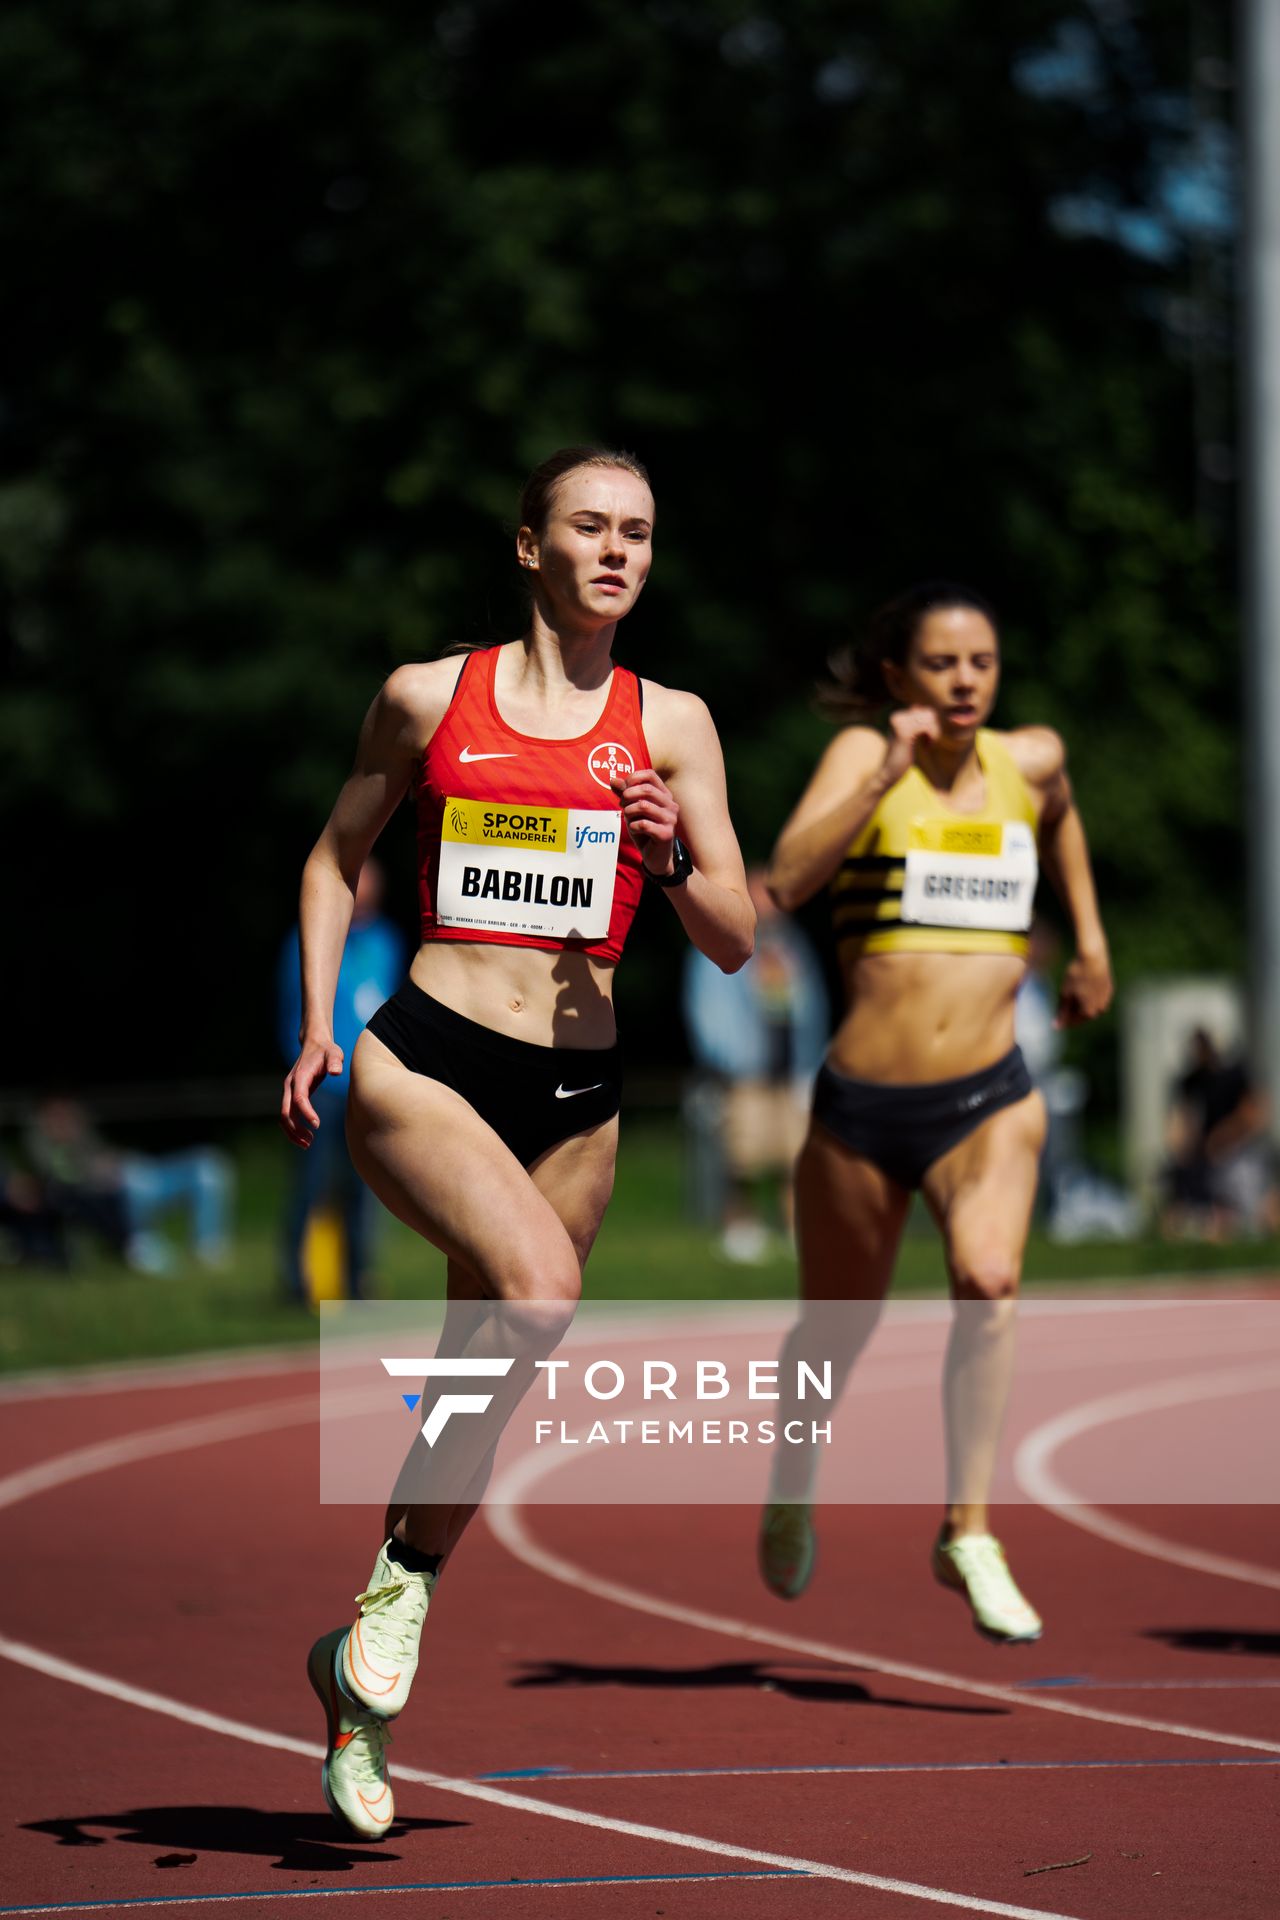 Rebekka Leslie Babilon (Germany) ueber 400m  am 28.05.2022 waehrend der World Athletics Continental Tour IFAM Oordegem in Oordegem